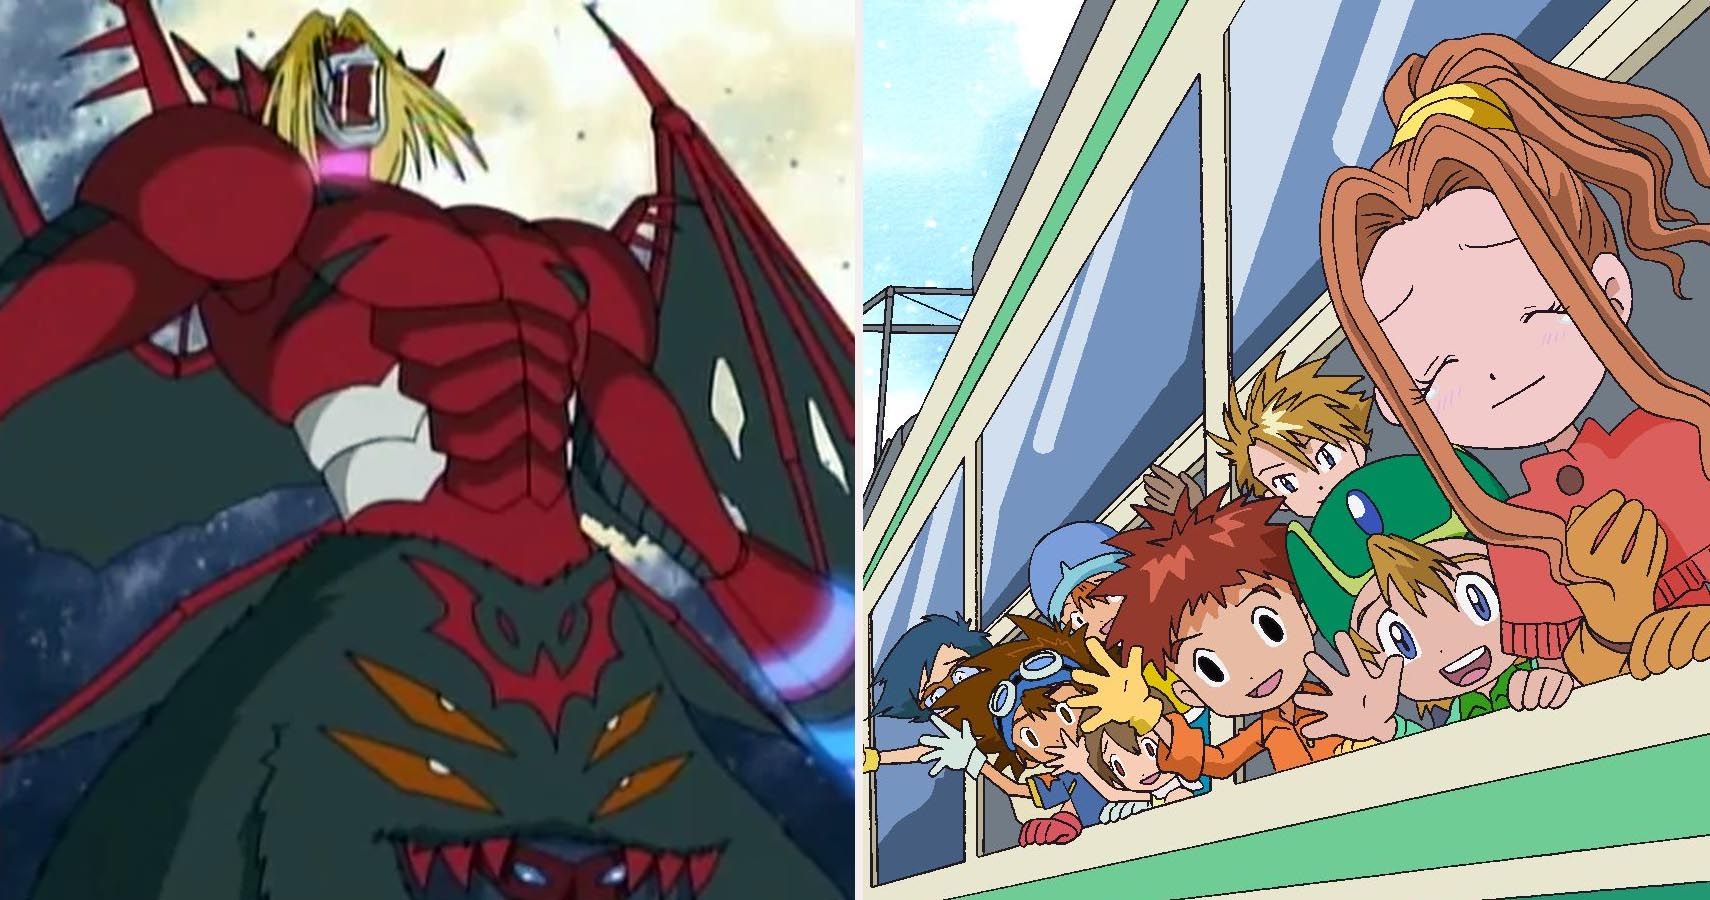 The Best Dragon Digimon